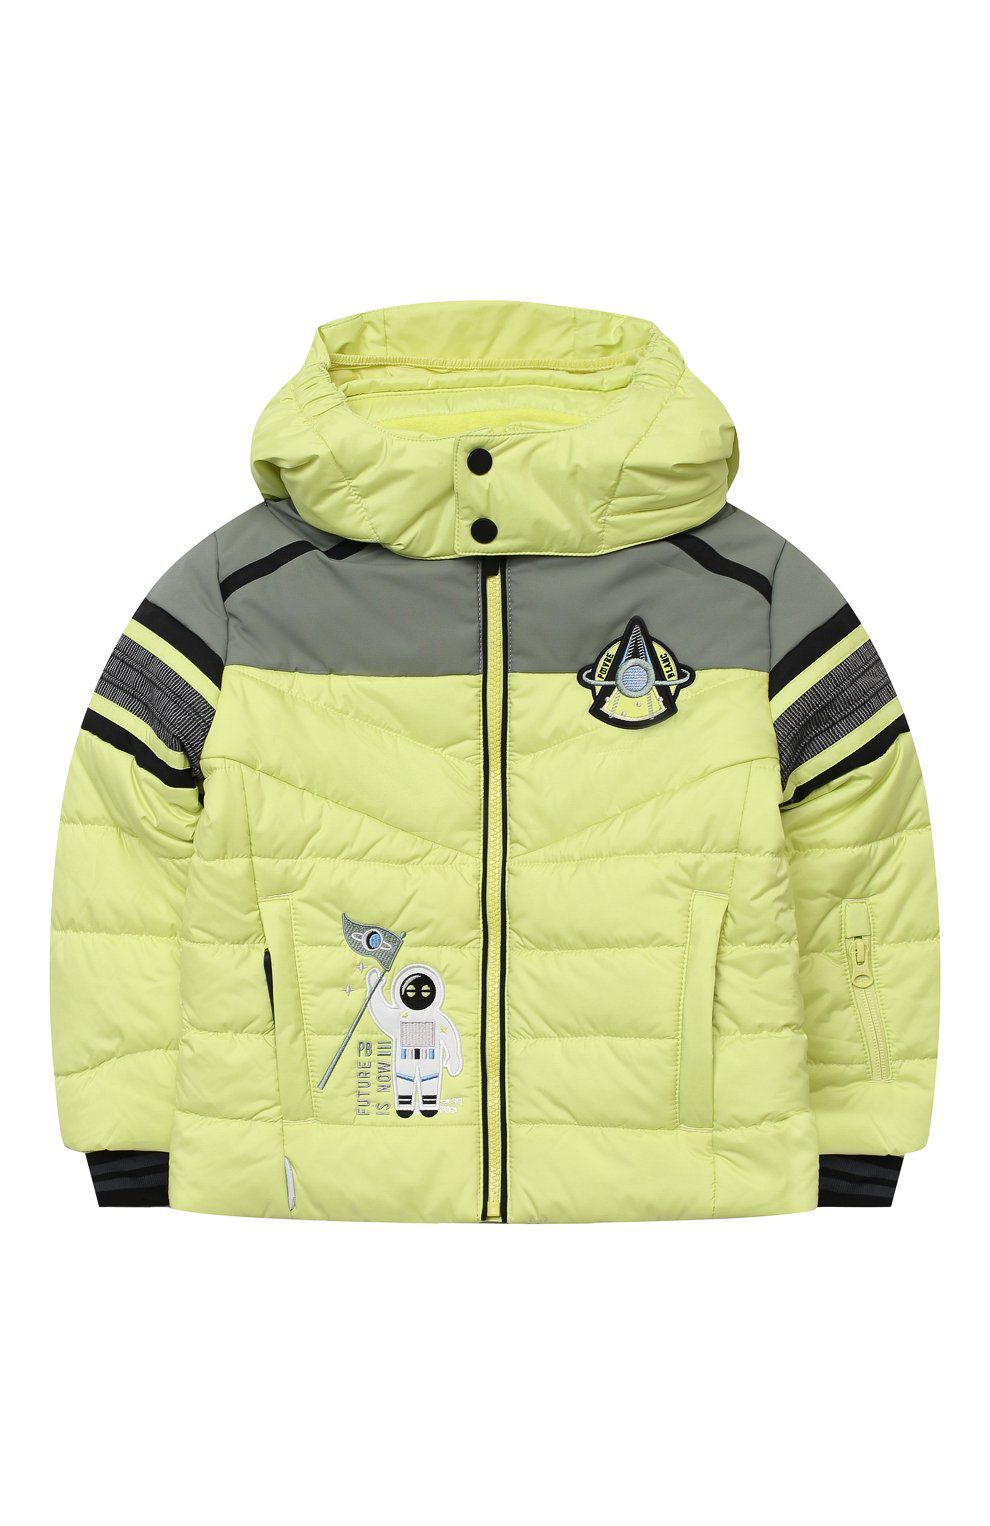 Куртка горнолыжная Poivre Blanc 20-21 Ski Jacket Aurora Yellow куртка горнолыжная poivre blanc 19 20 ski jacket aqua blue